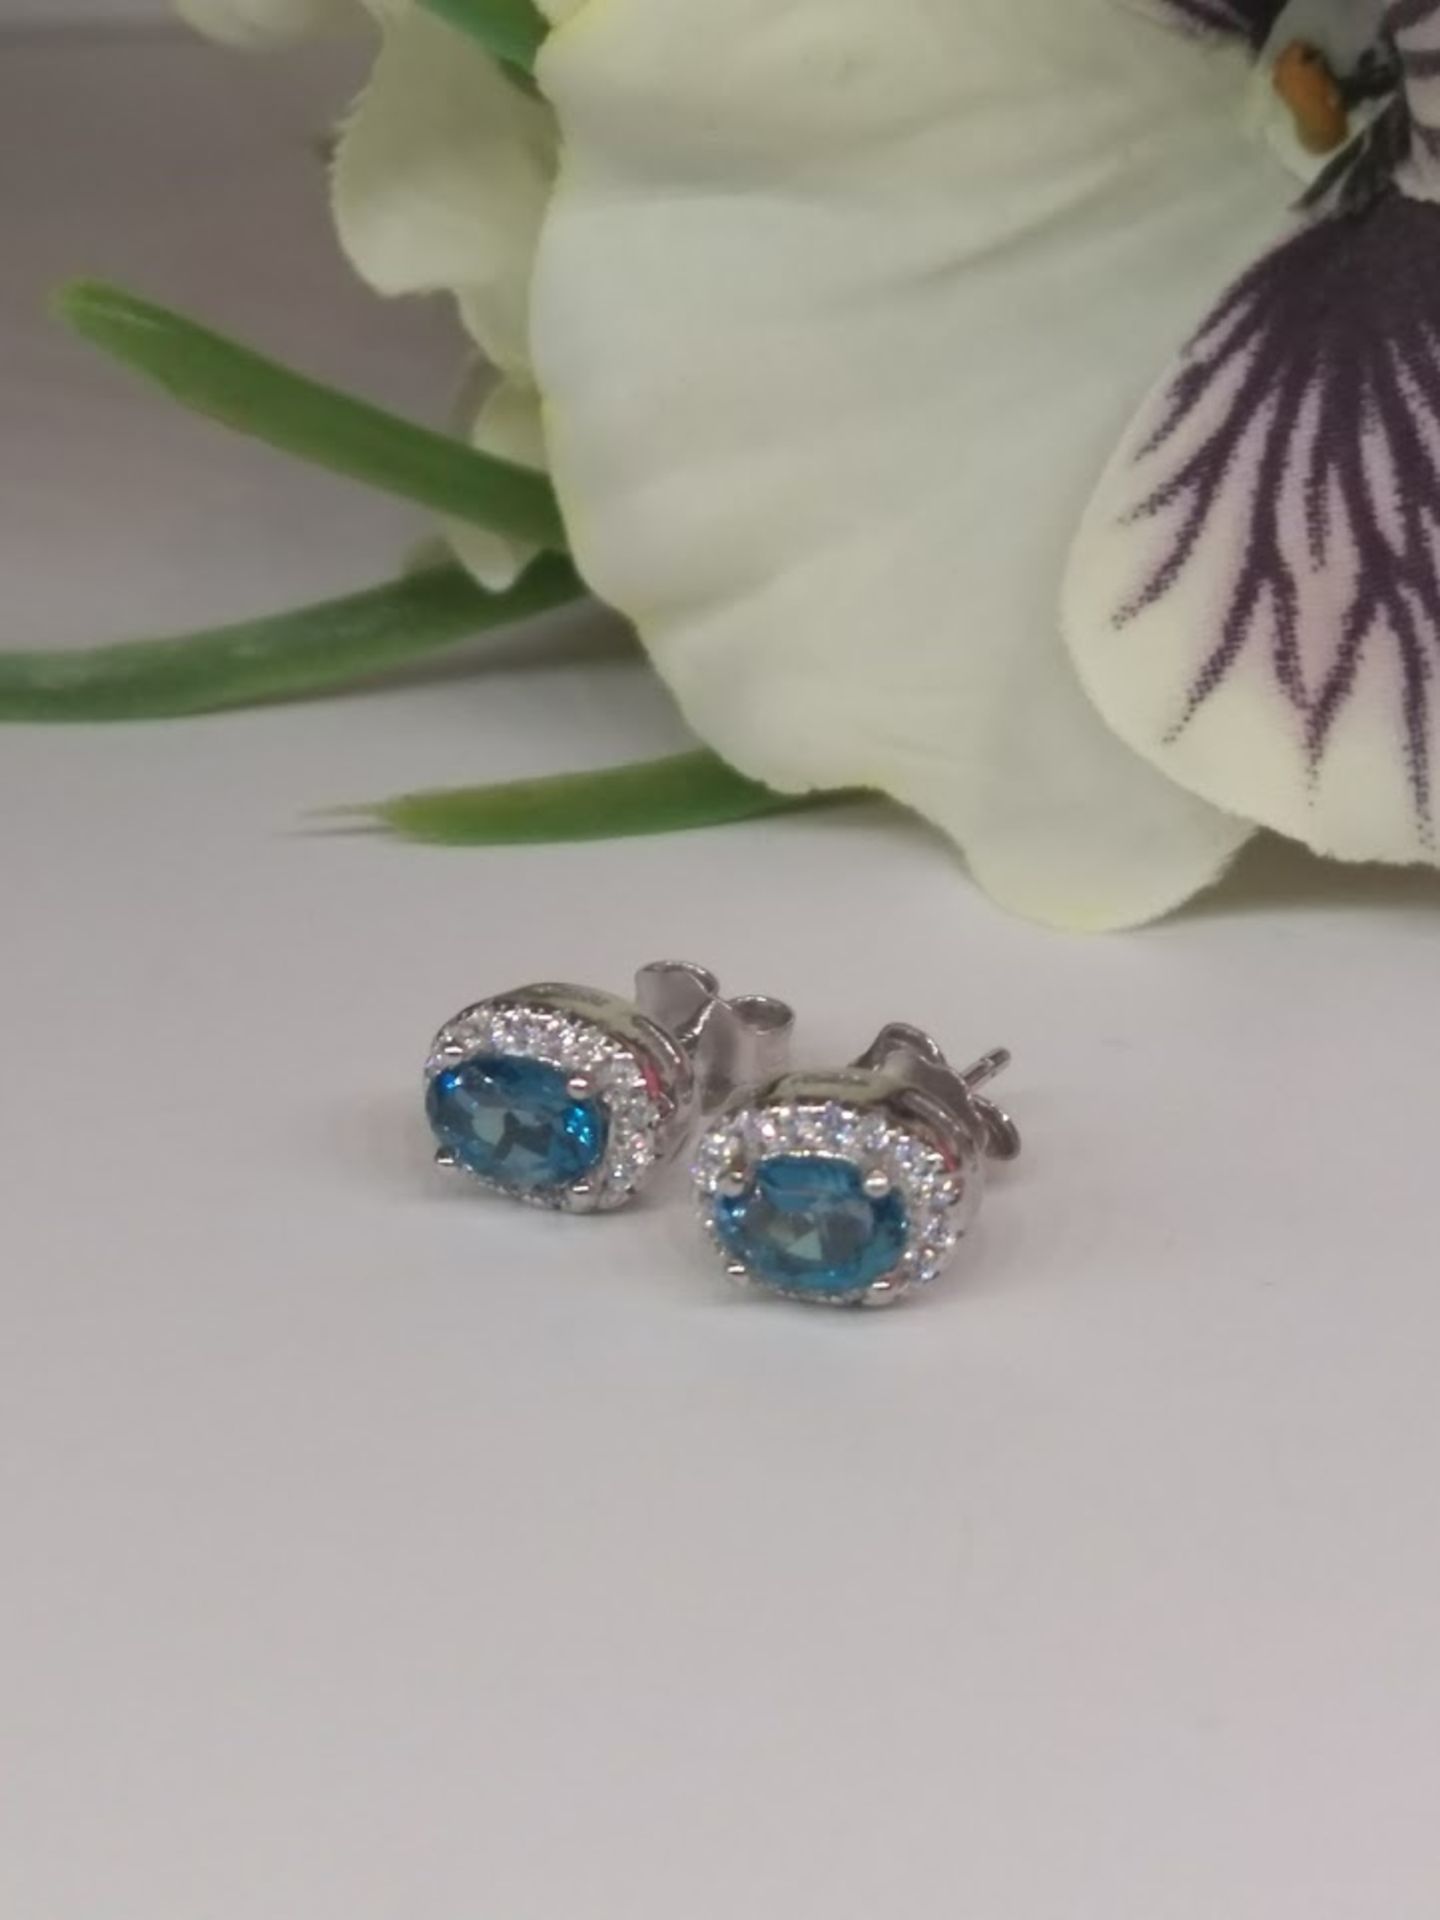 Elegant Oval Top London Blue African Topaz Gemstone Earrings, Bespoke - Unique - One of a Kind. - Image 2 of 2